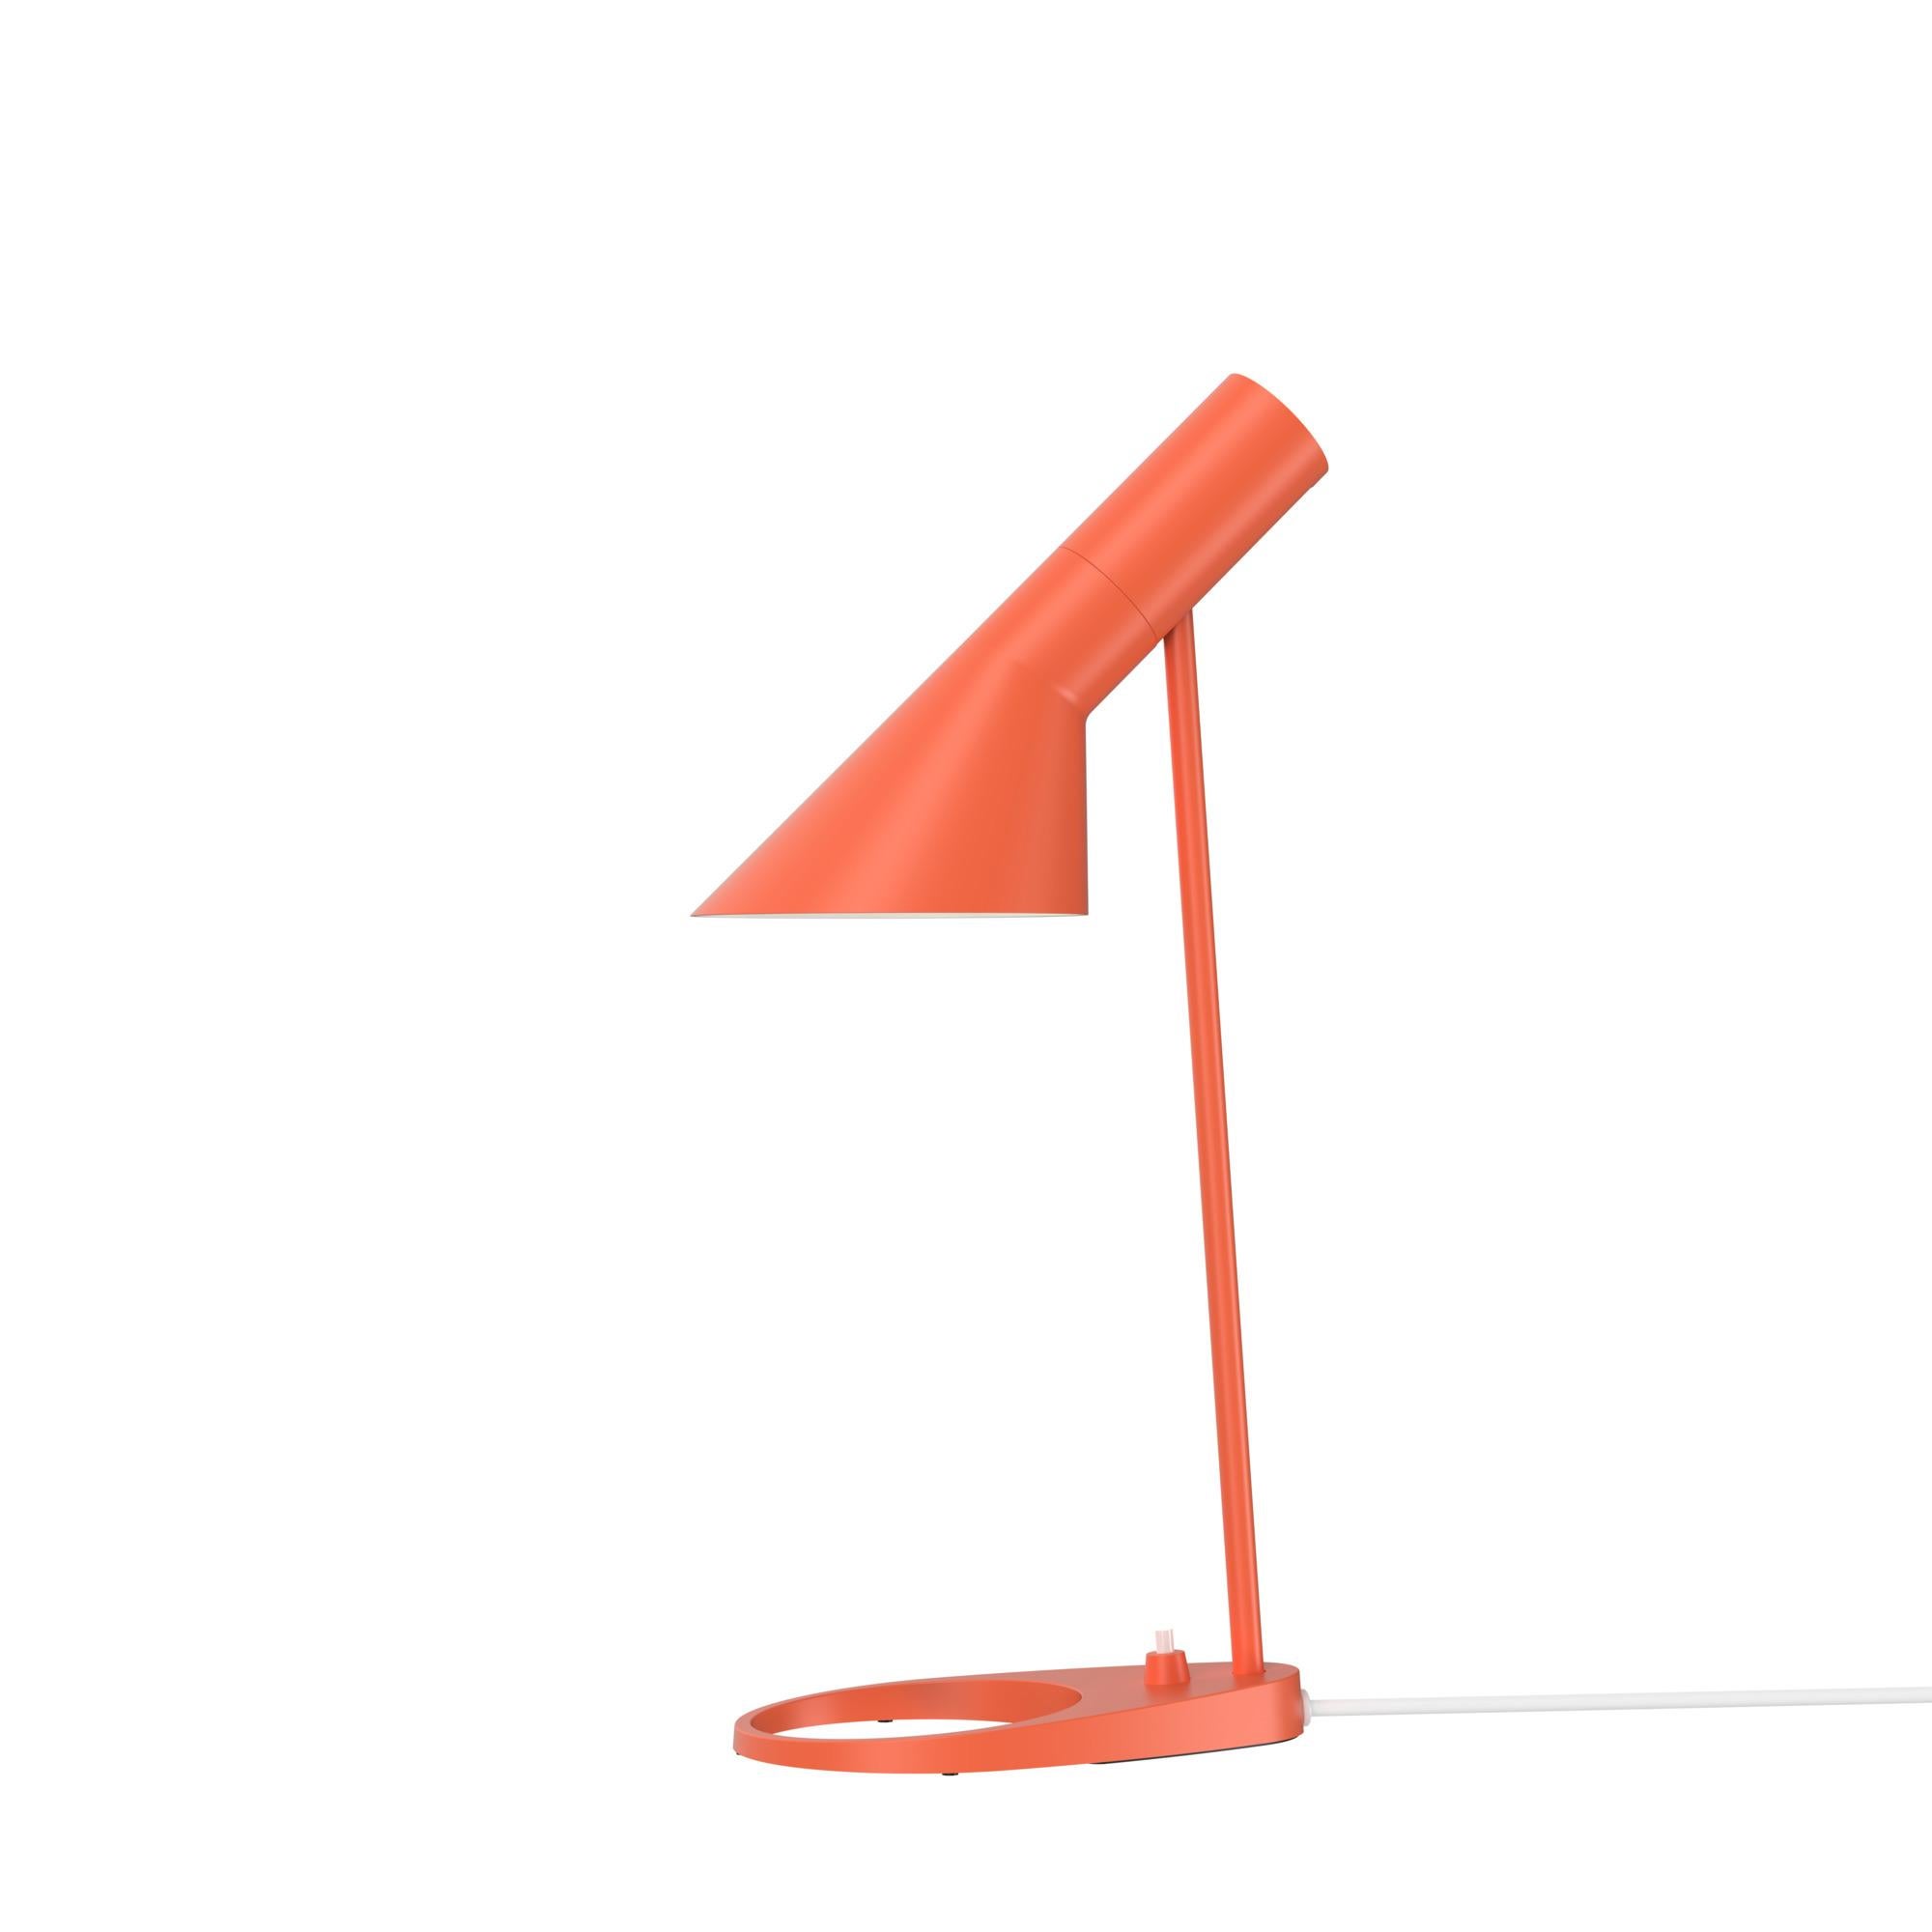 Arne Jacobsen 'AJ Mini' Table Lamp in Warm Sand for Louis Poulsen For Sale 9